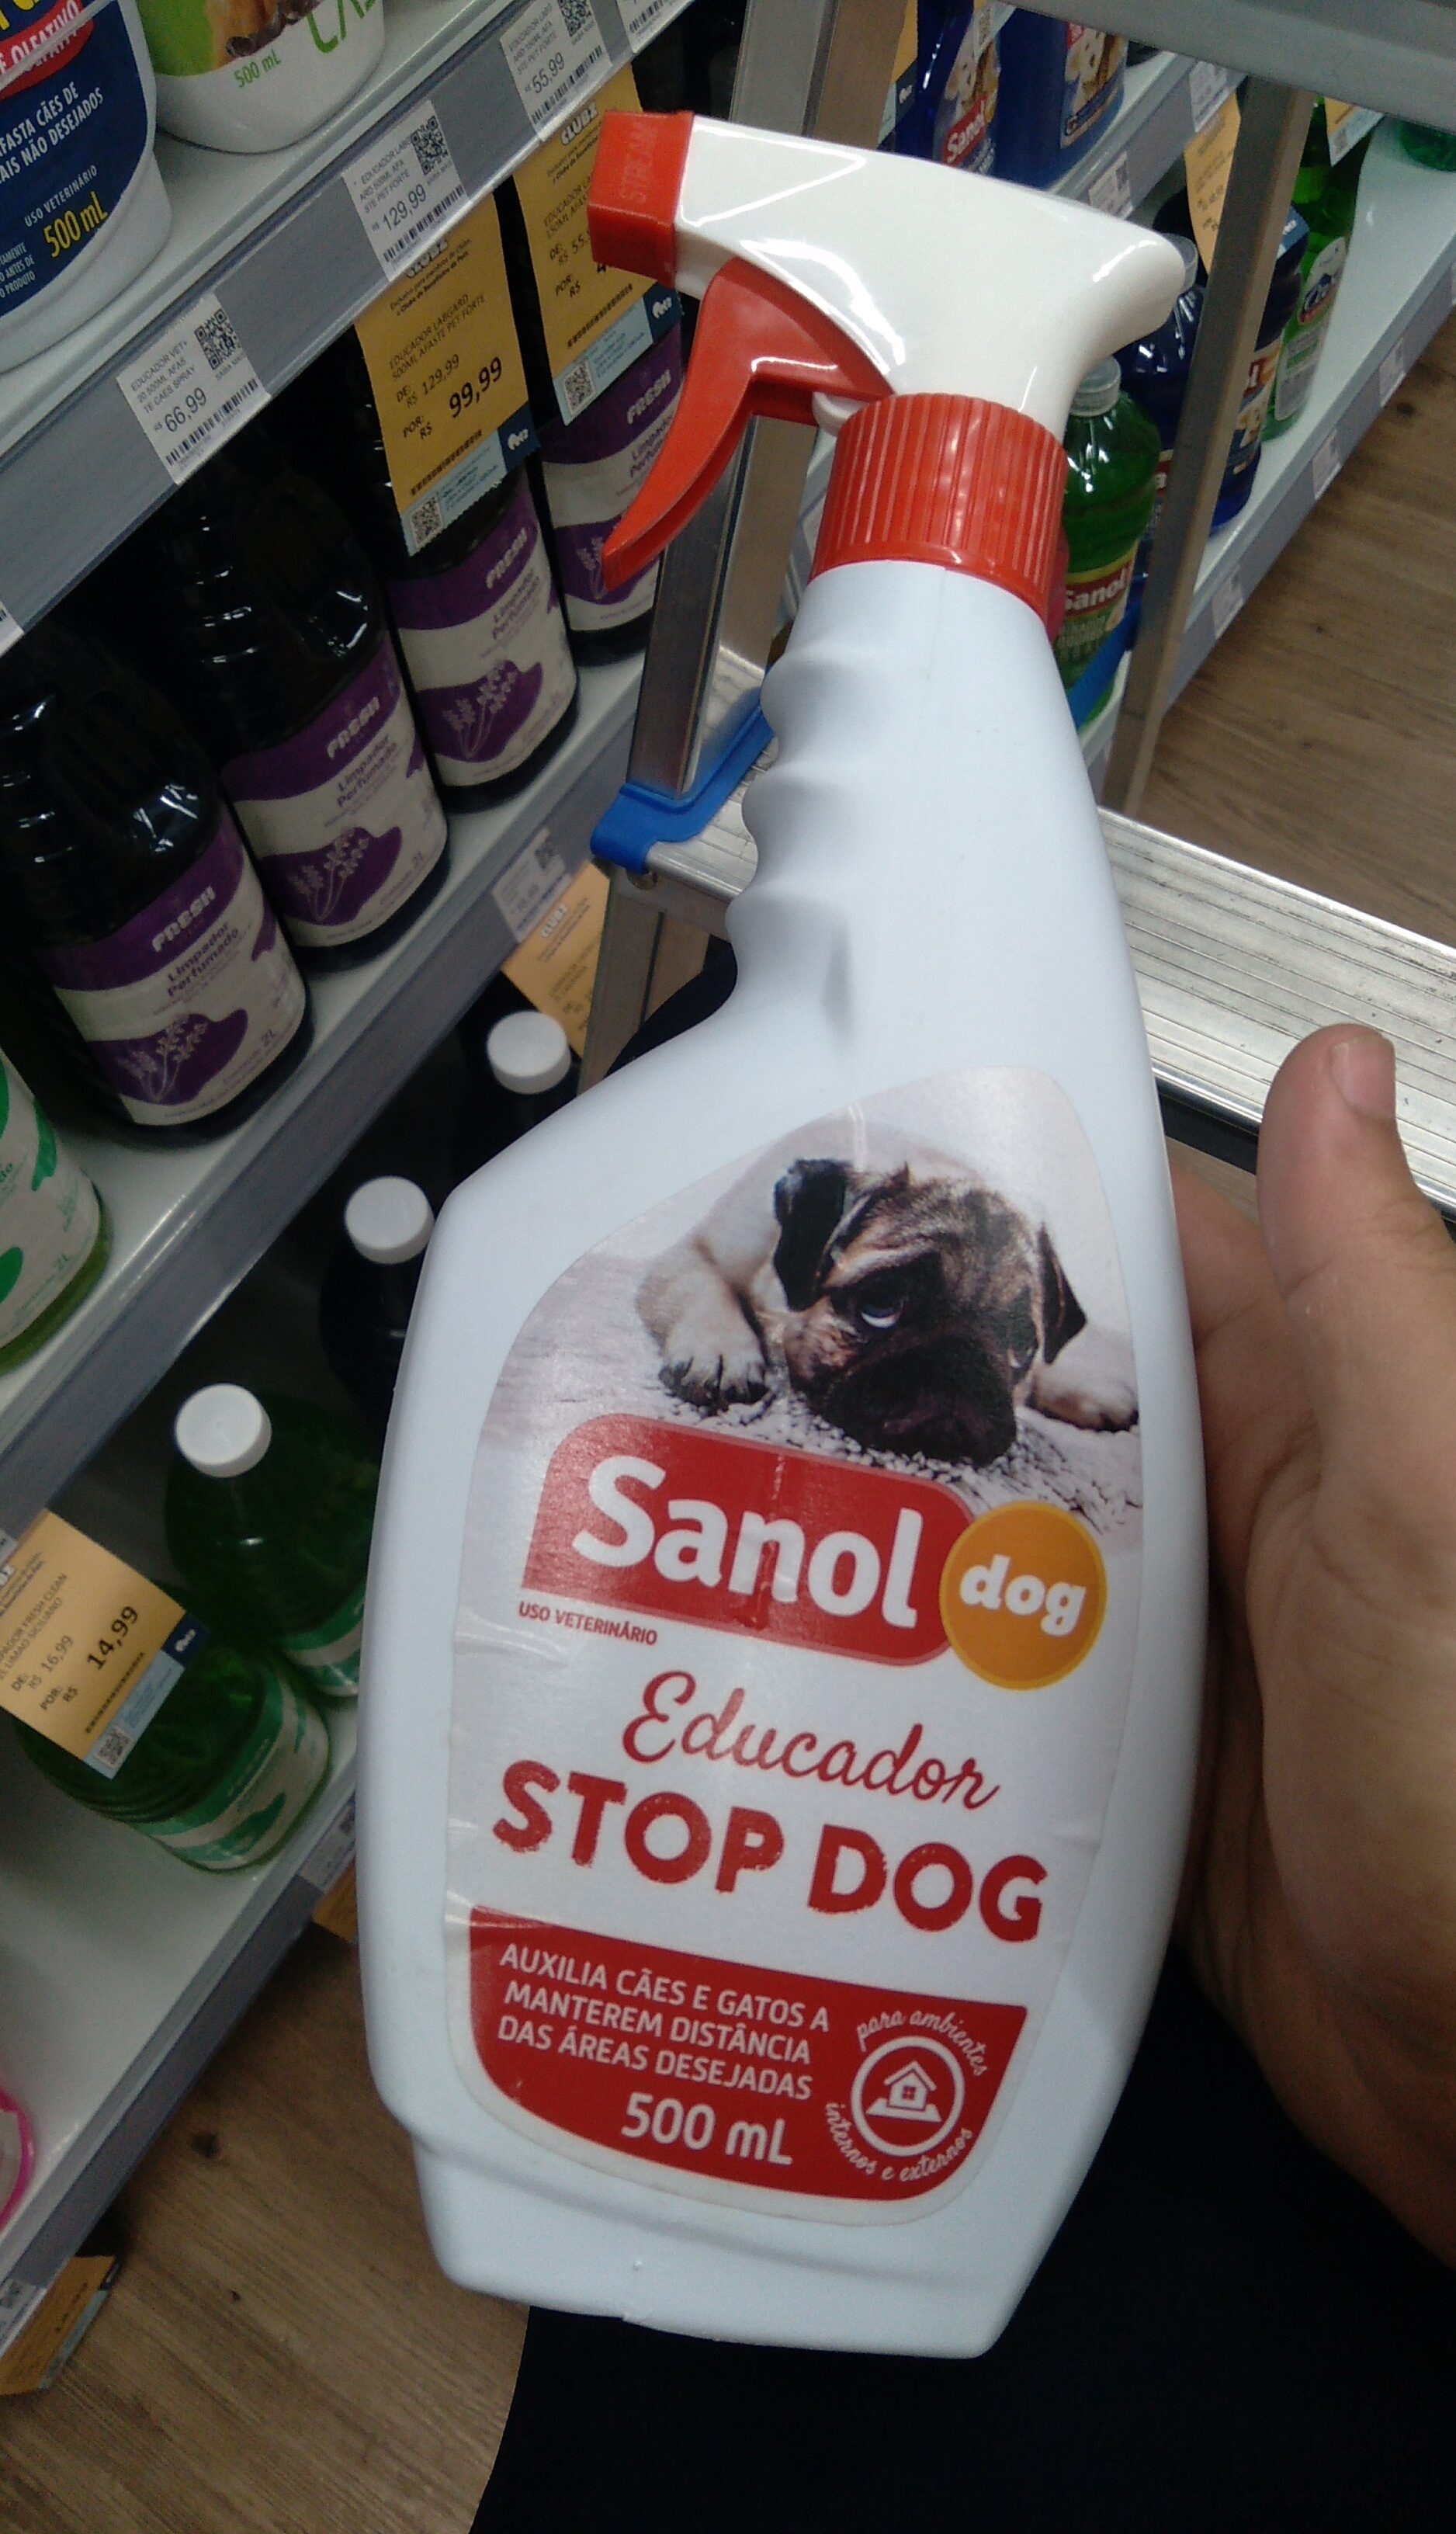 Educadores SANOL DOG 500ML STOP DOG - Product - pt